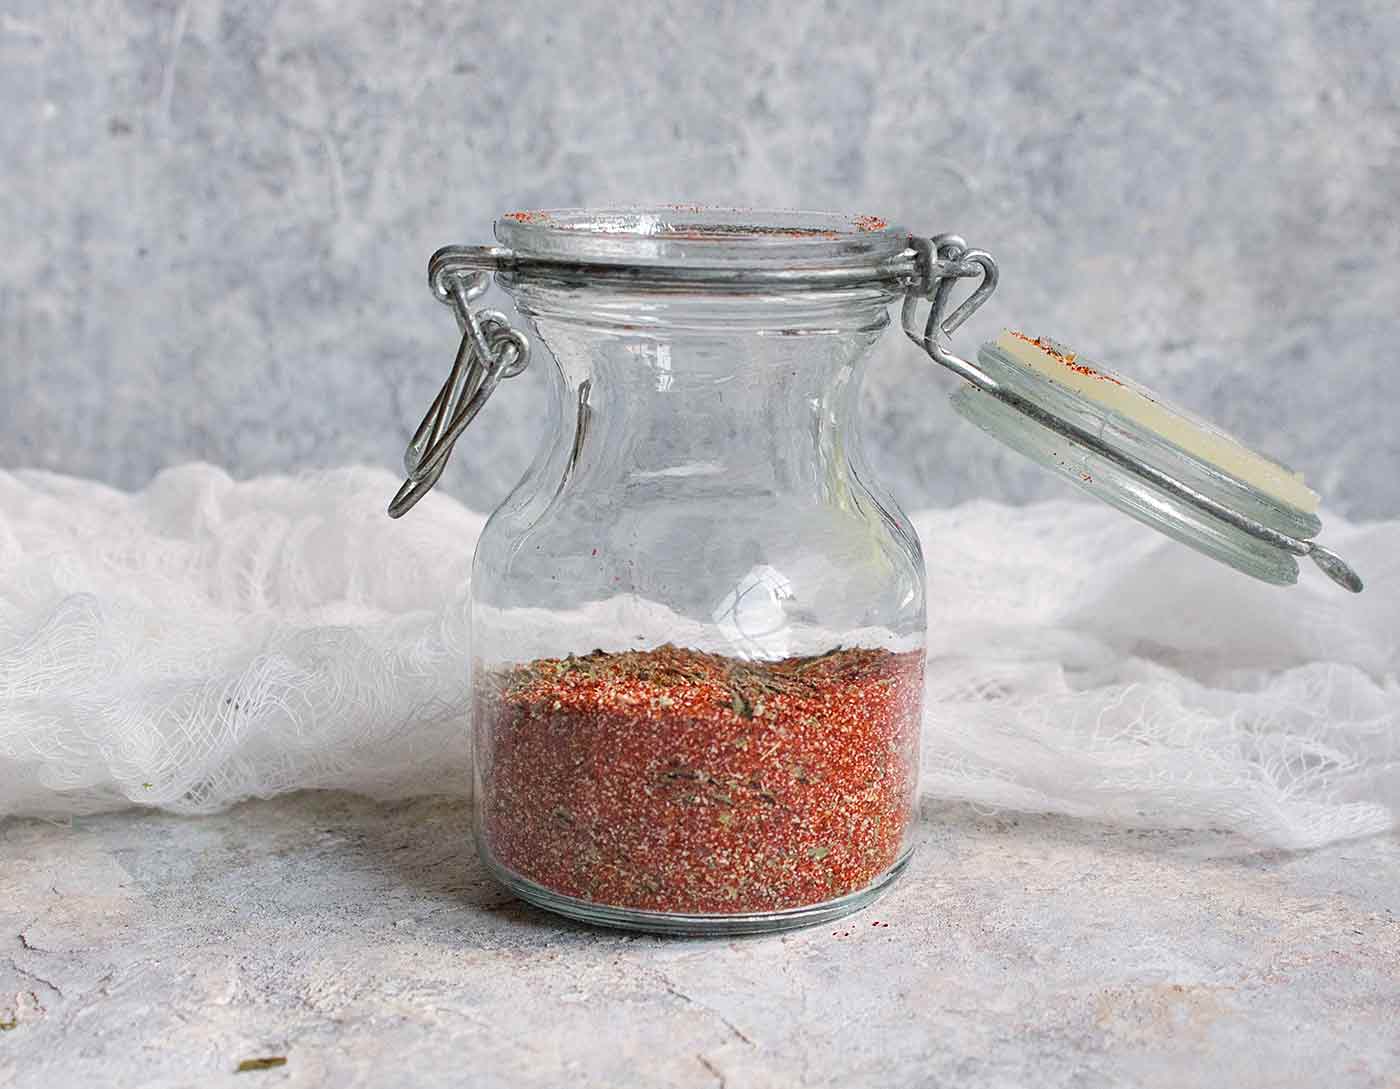 Creole seasoning in a glass jar